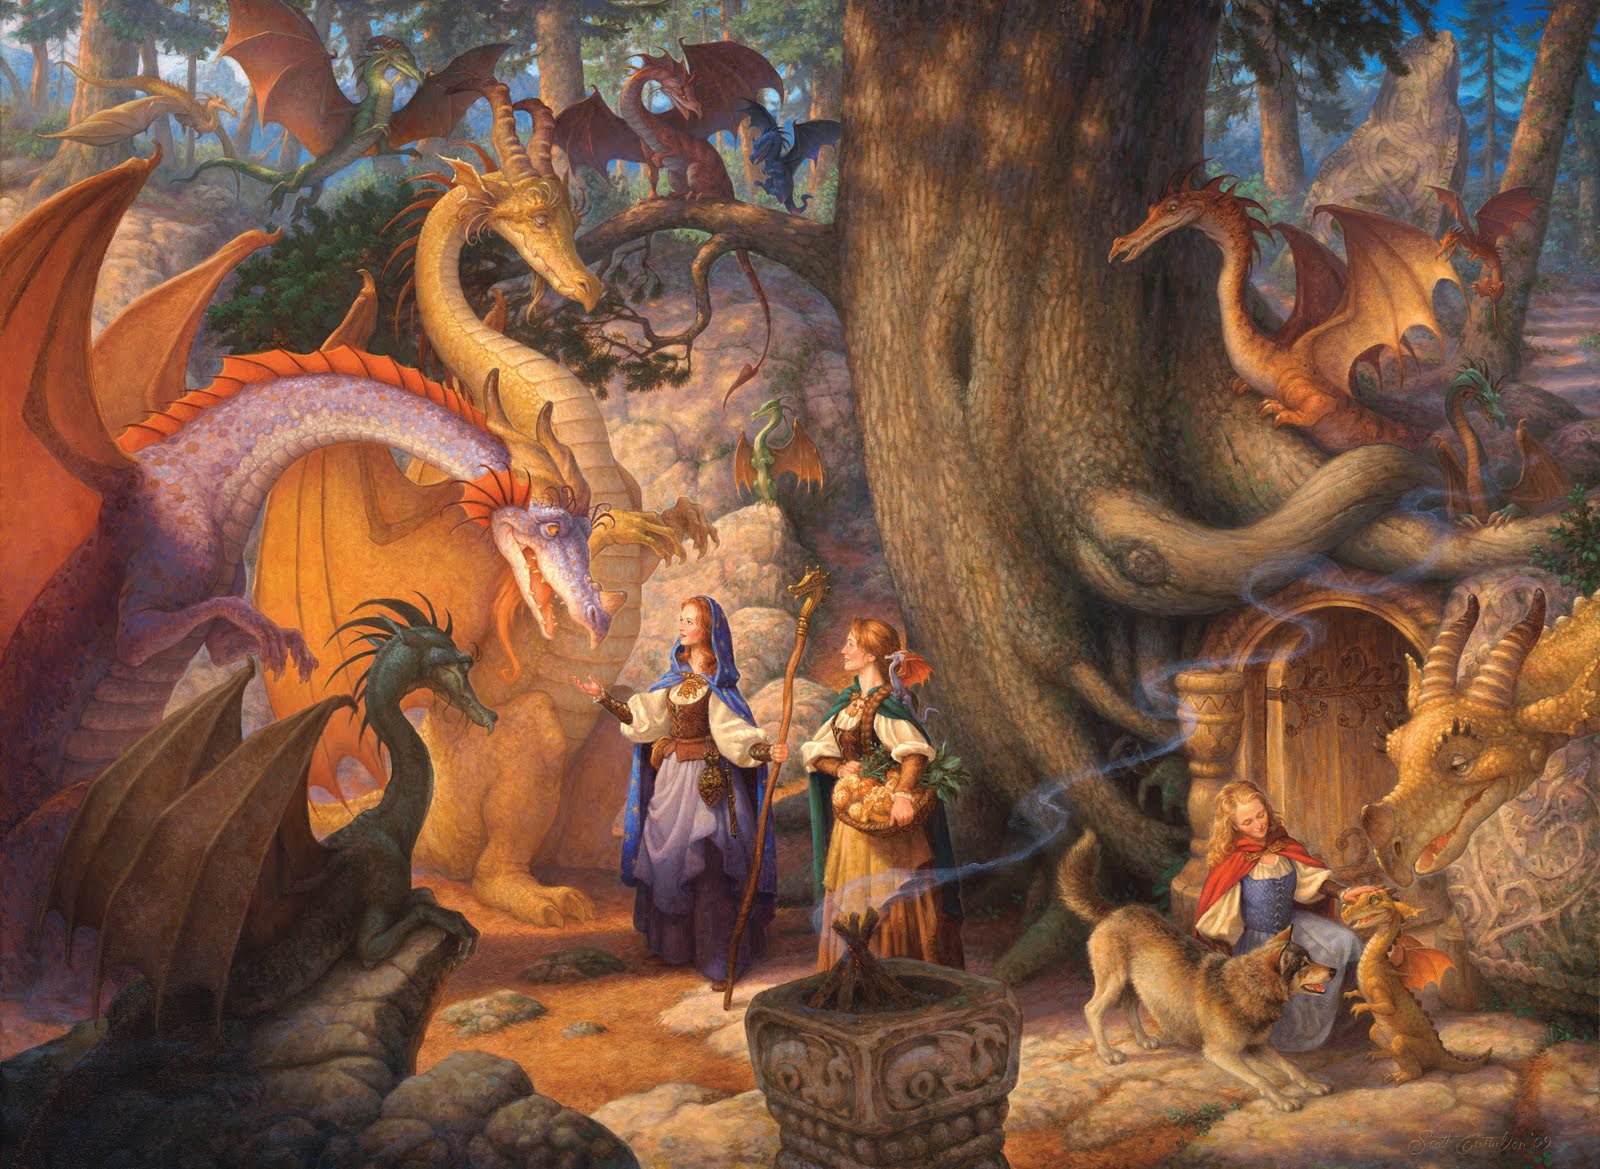 Dark Parables: Ballad of Rapunzel Collectors Edition on Steam